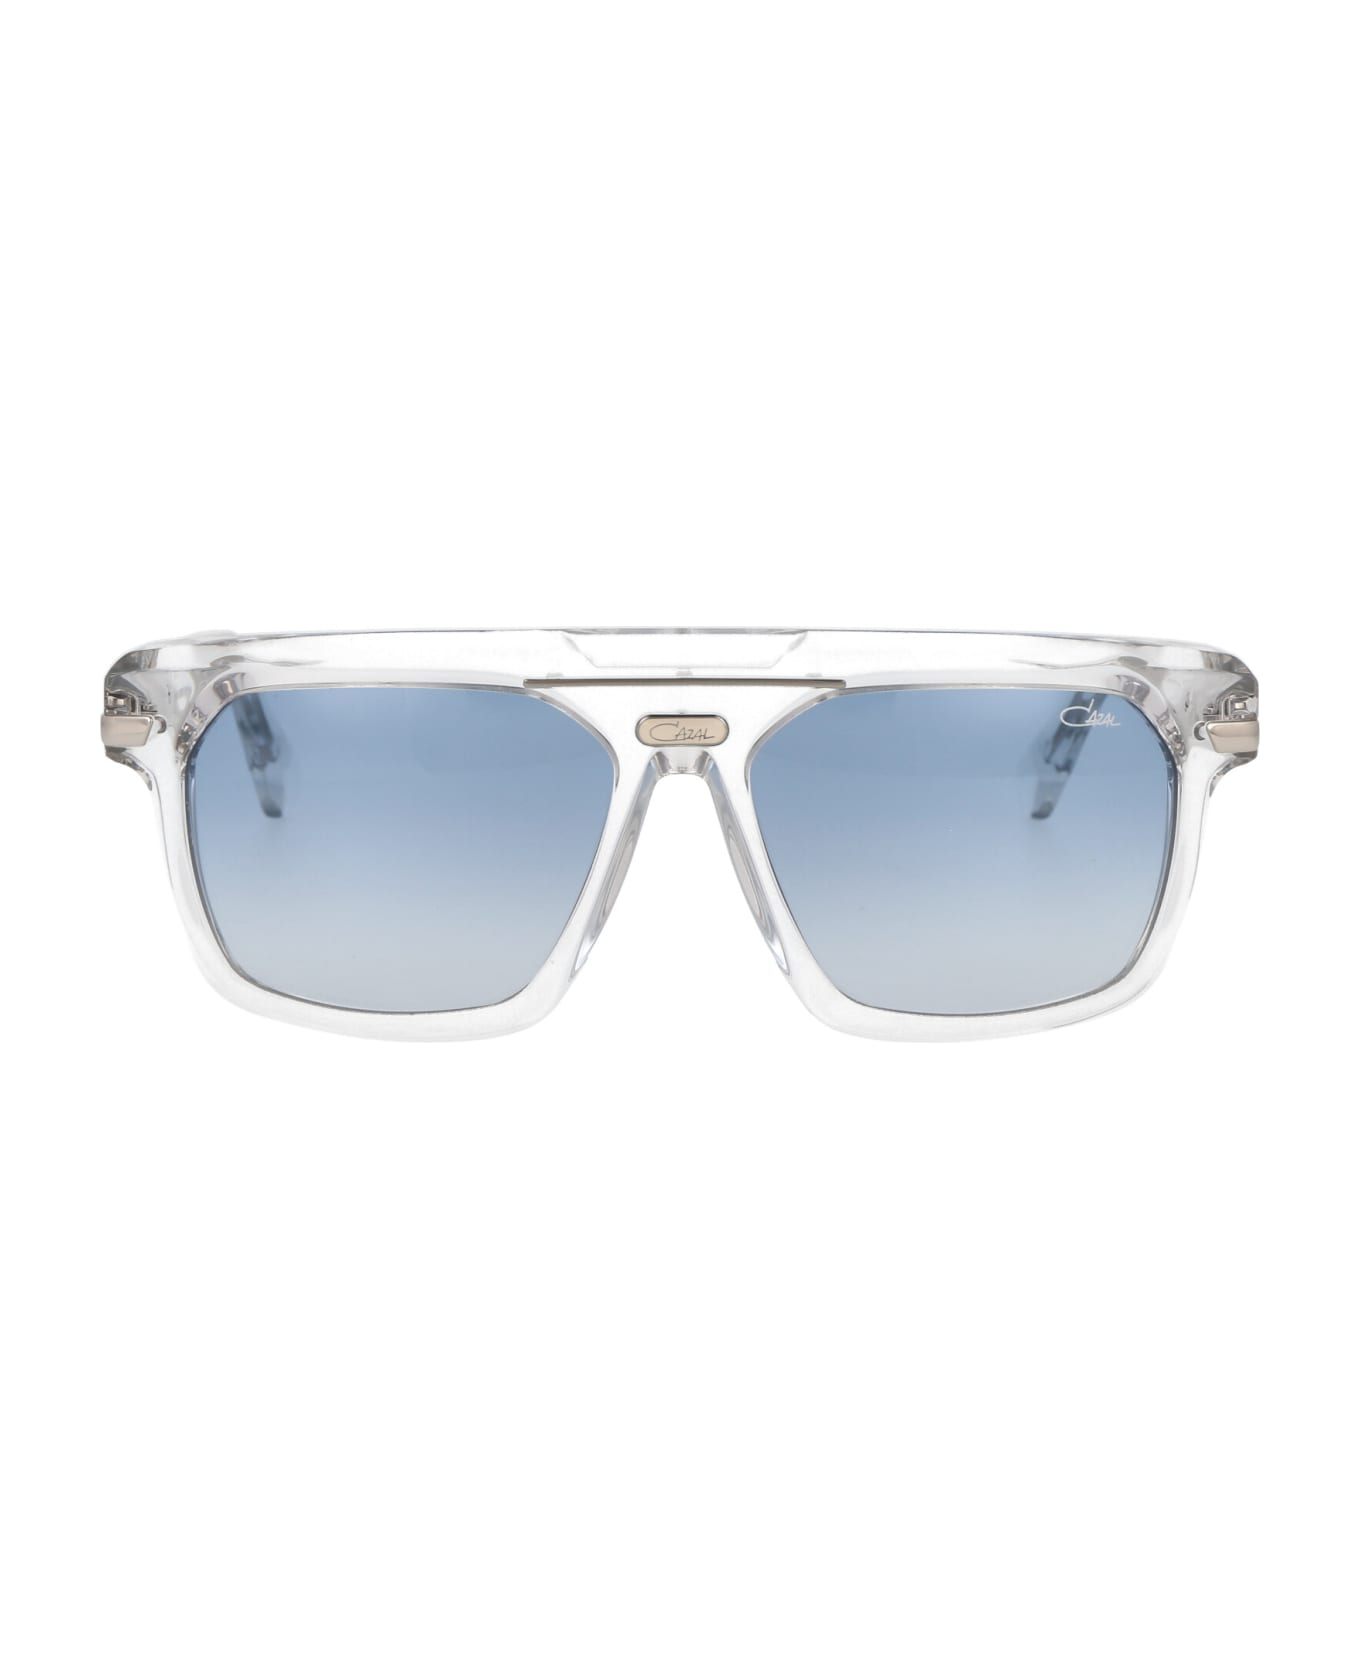 Cazal Mod. 8040 Sunglasses - 002 CRYSTAL サングラス